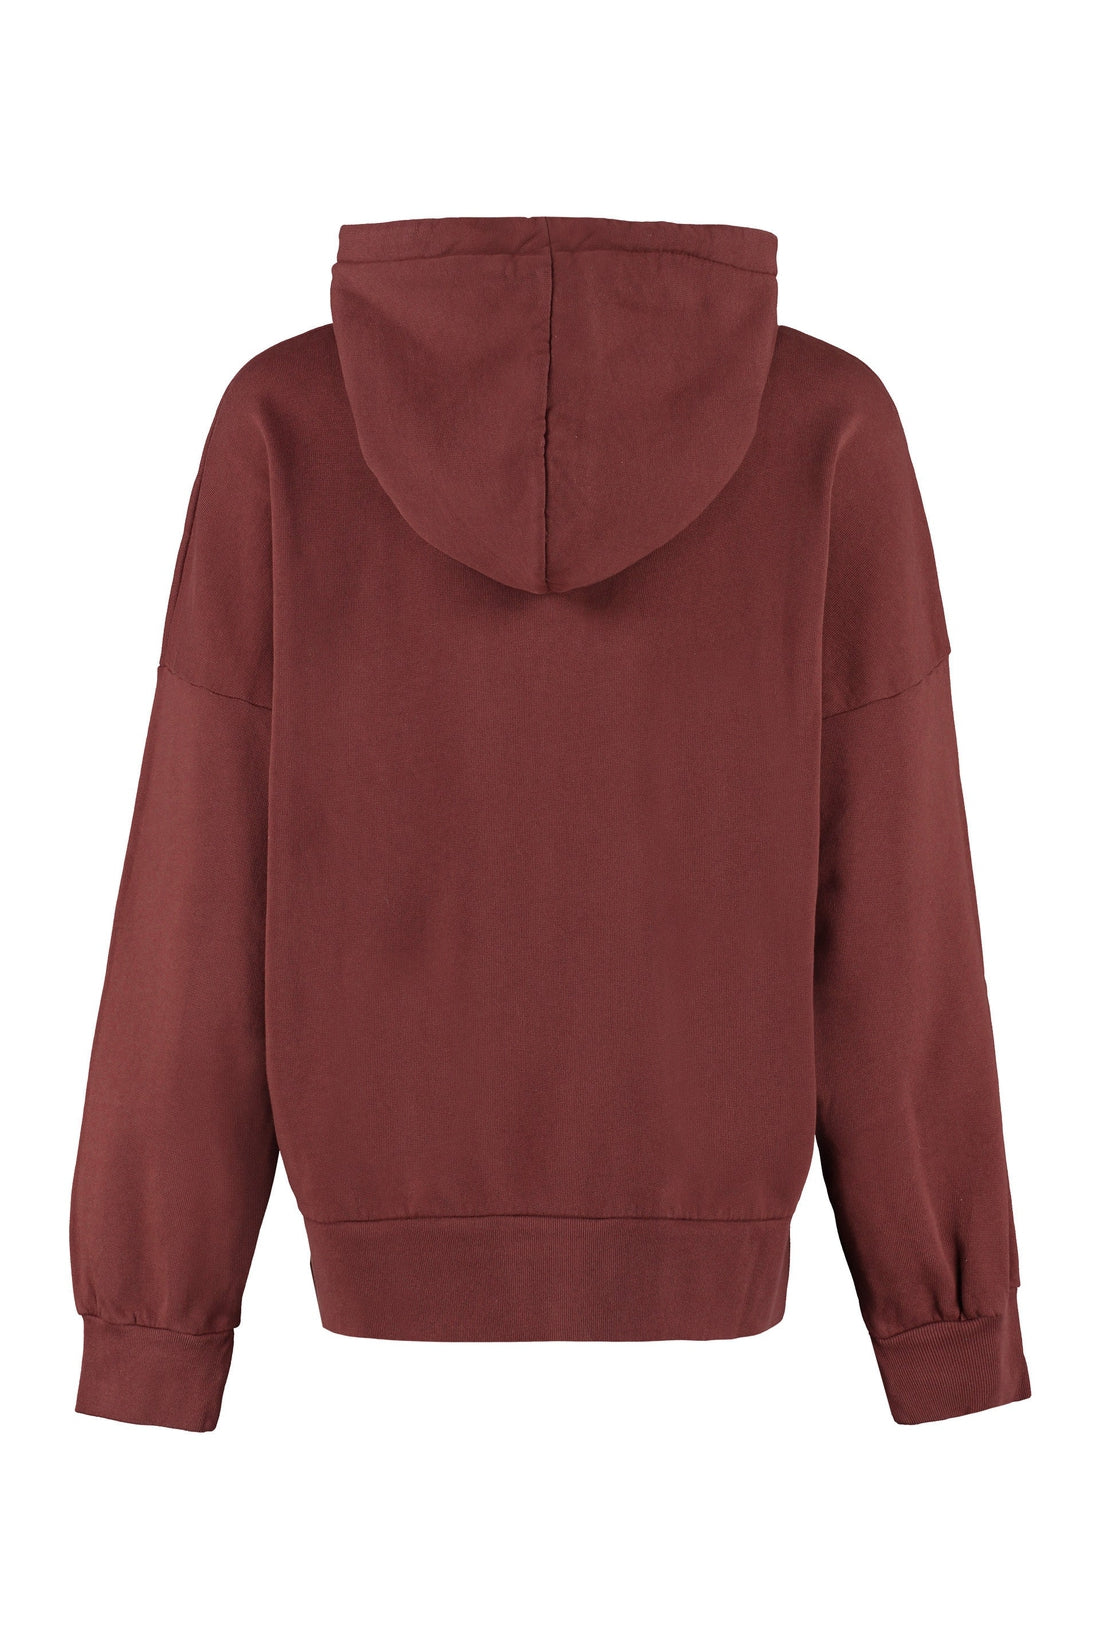 Mother-OUTLET-SALE-Cotton hoodie-ARCHIVIST